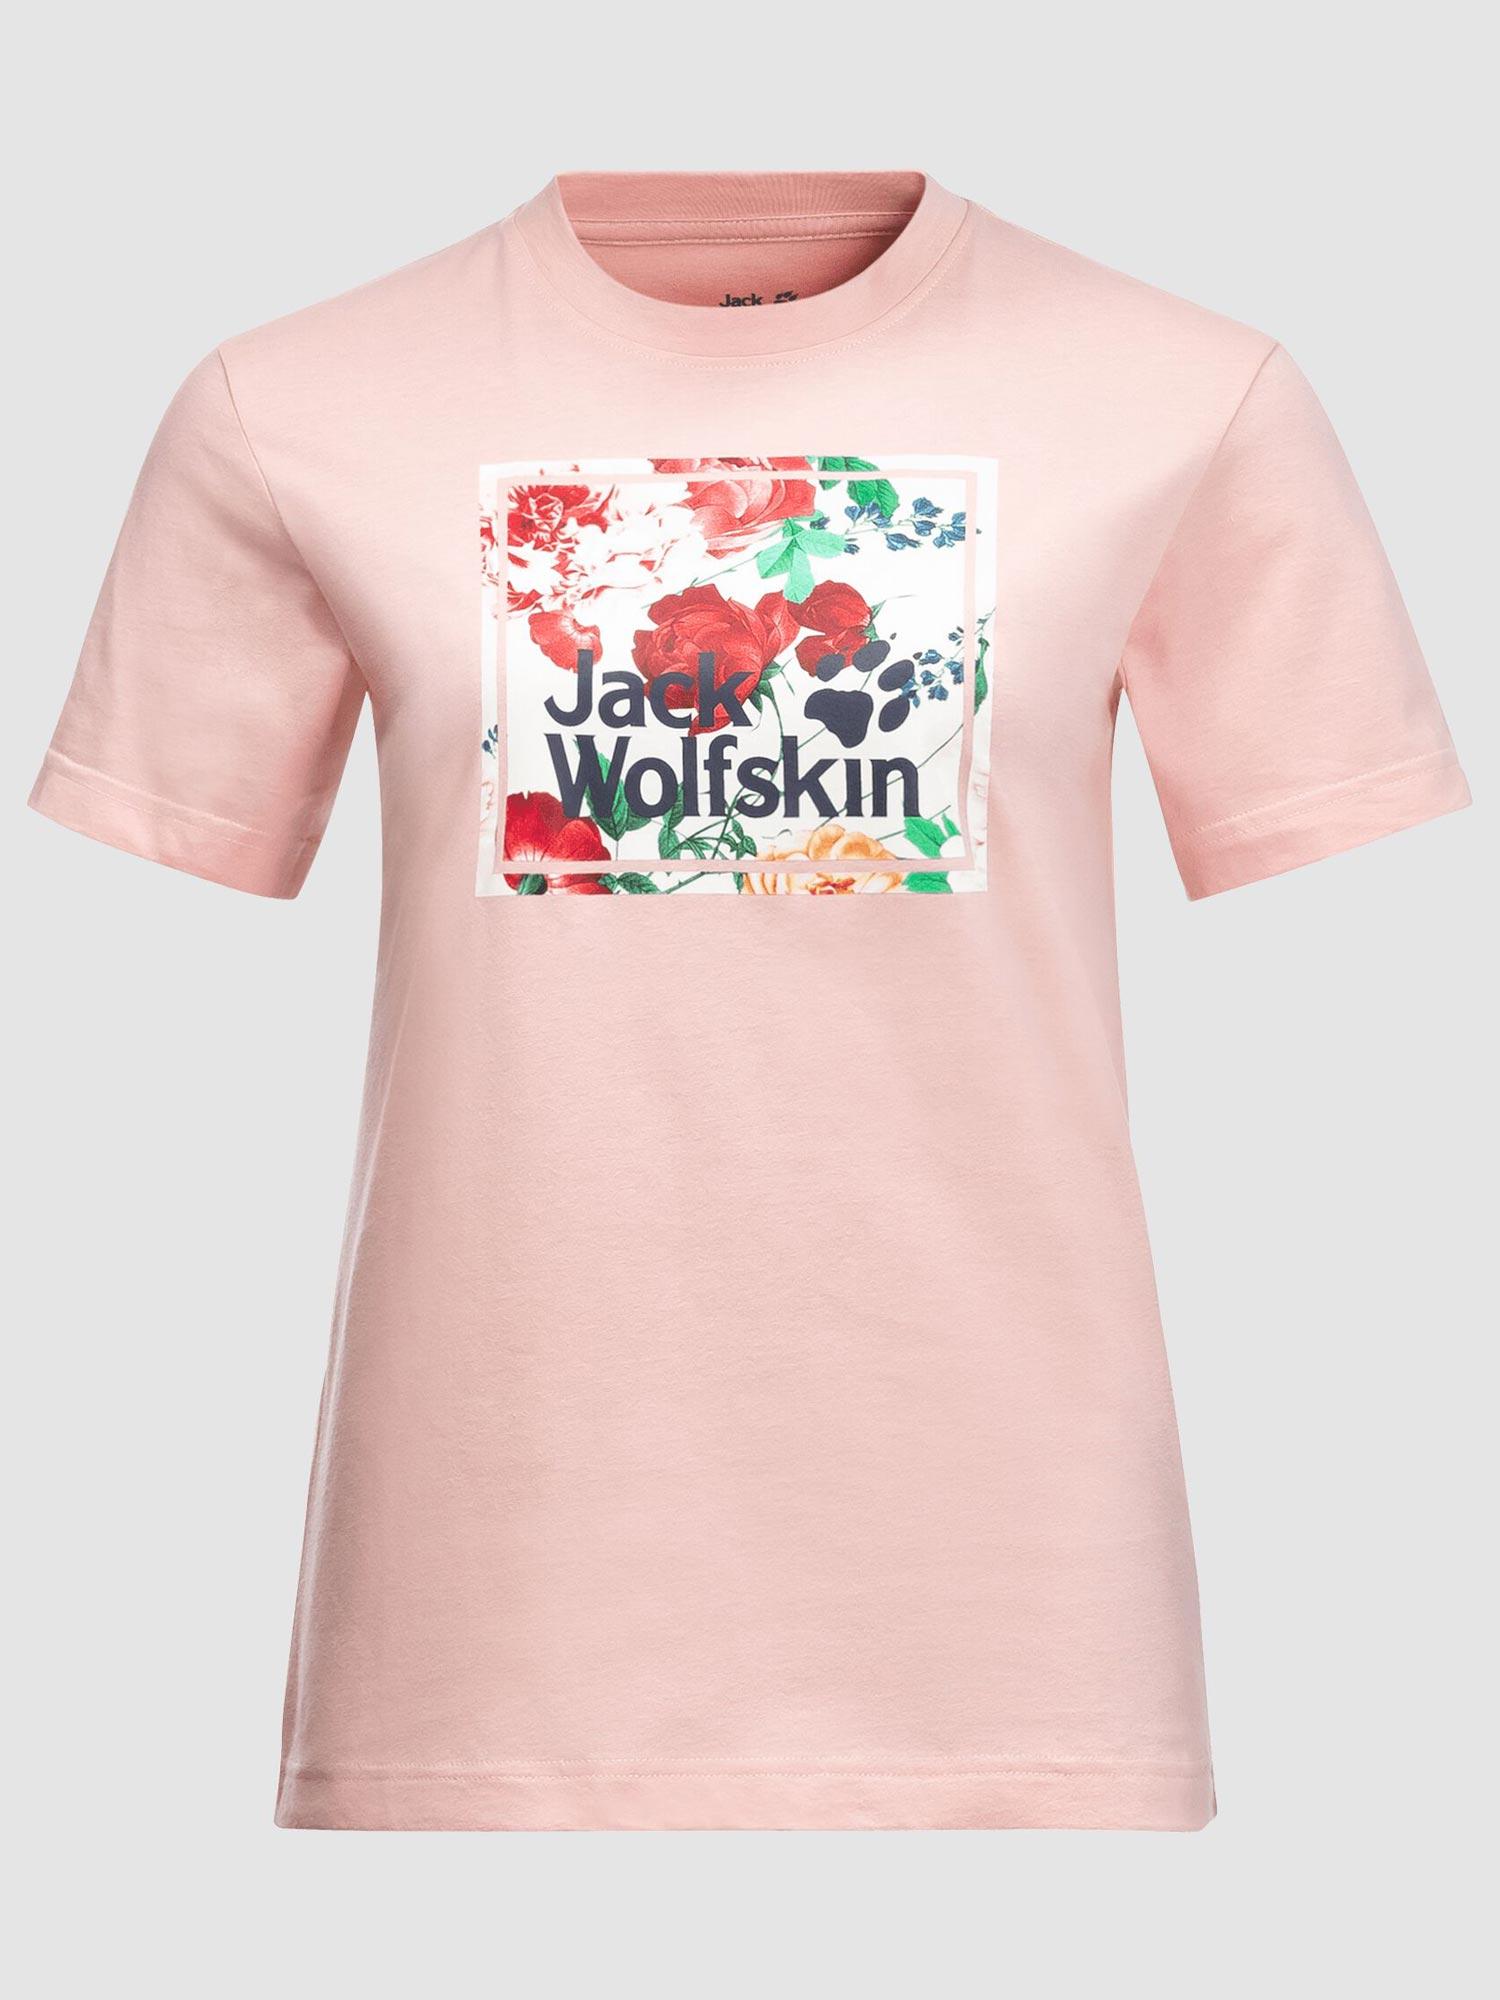 Selected image for JACK WOLFSKIN Ženska majica FLOWER LOGO T W roze